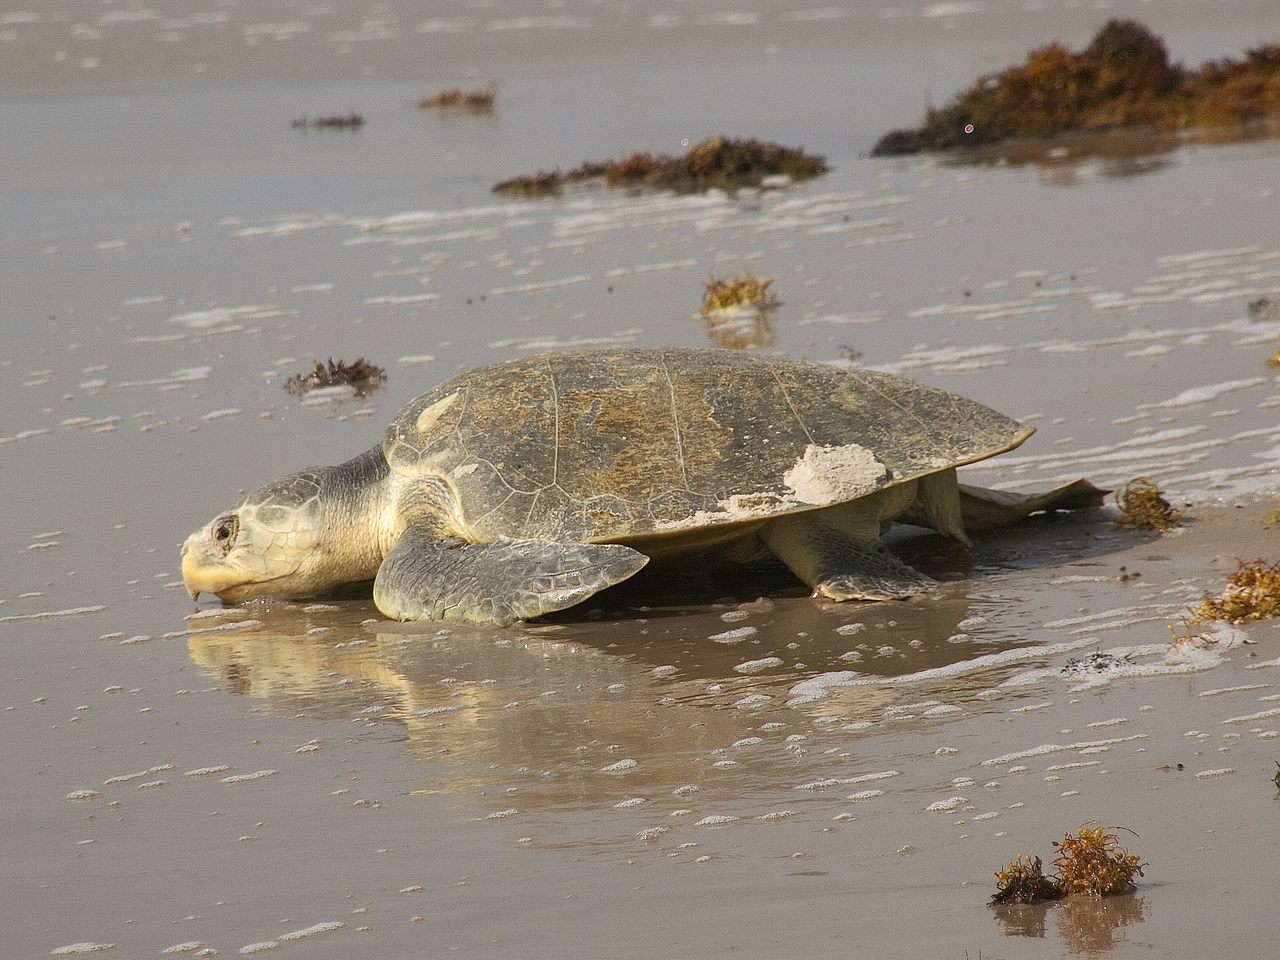 An adult Kemp's ridley sea turtle heading to sea.